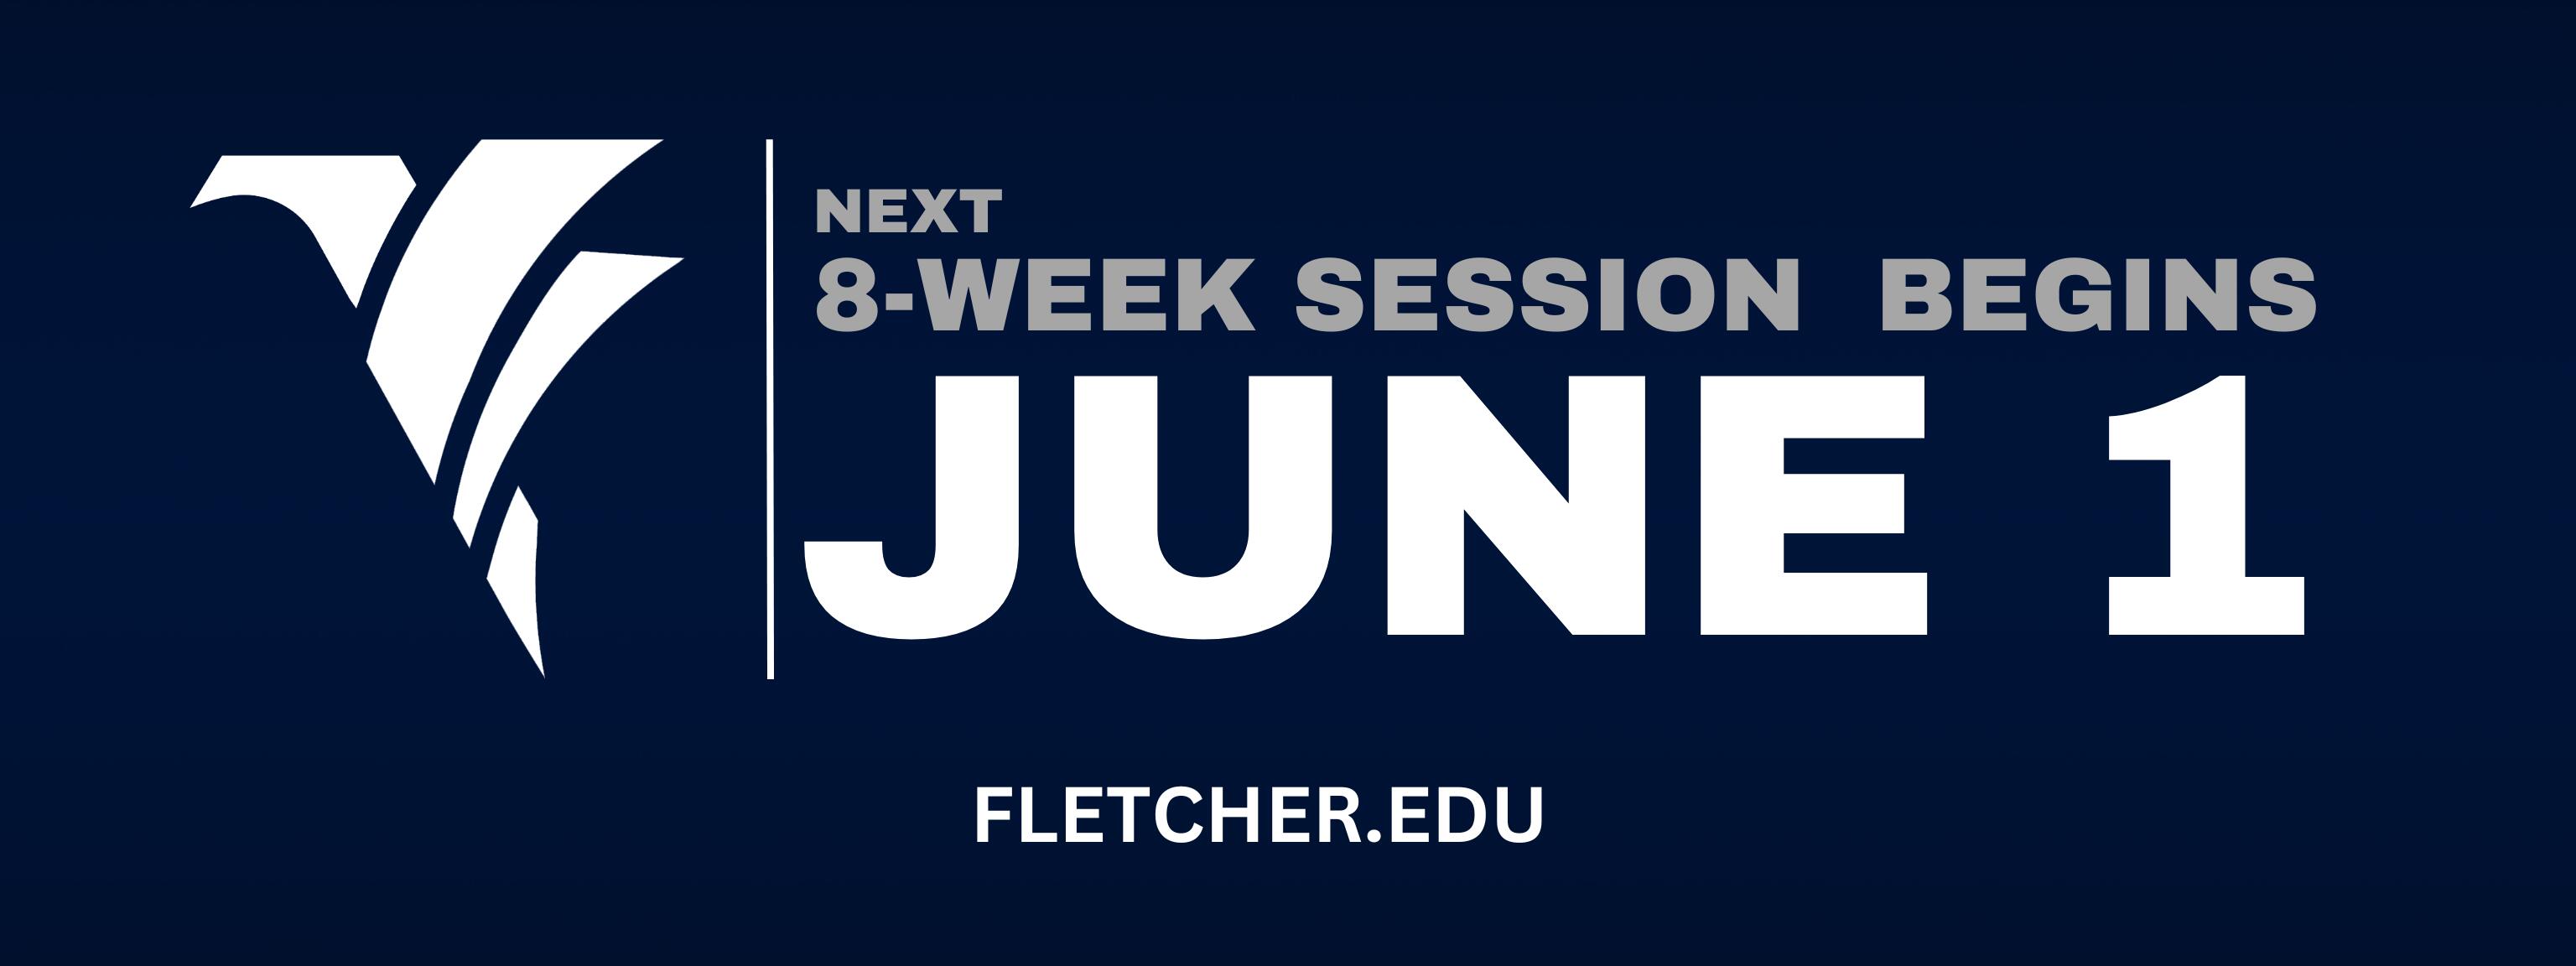 Next 8-week session begins June 1